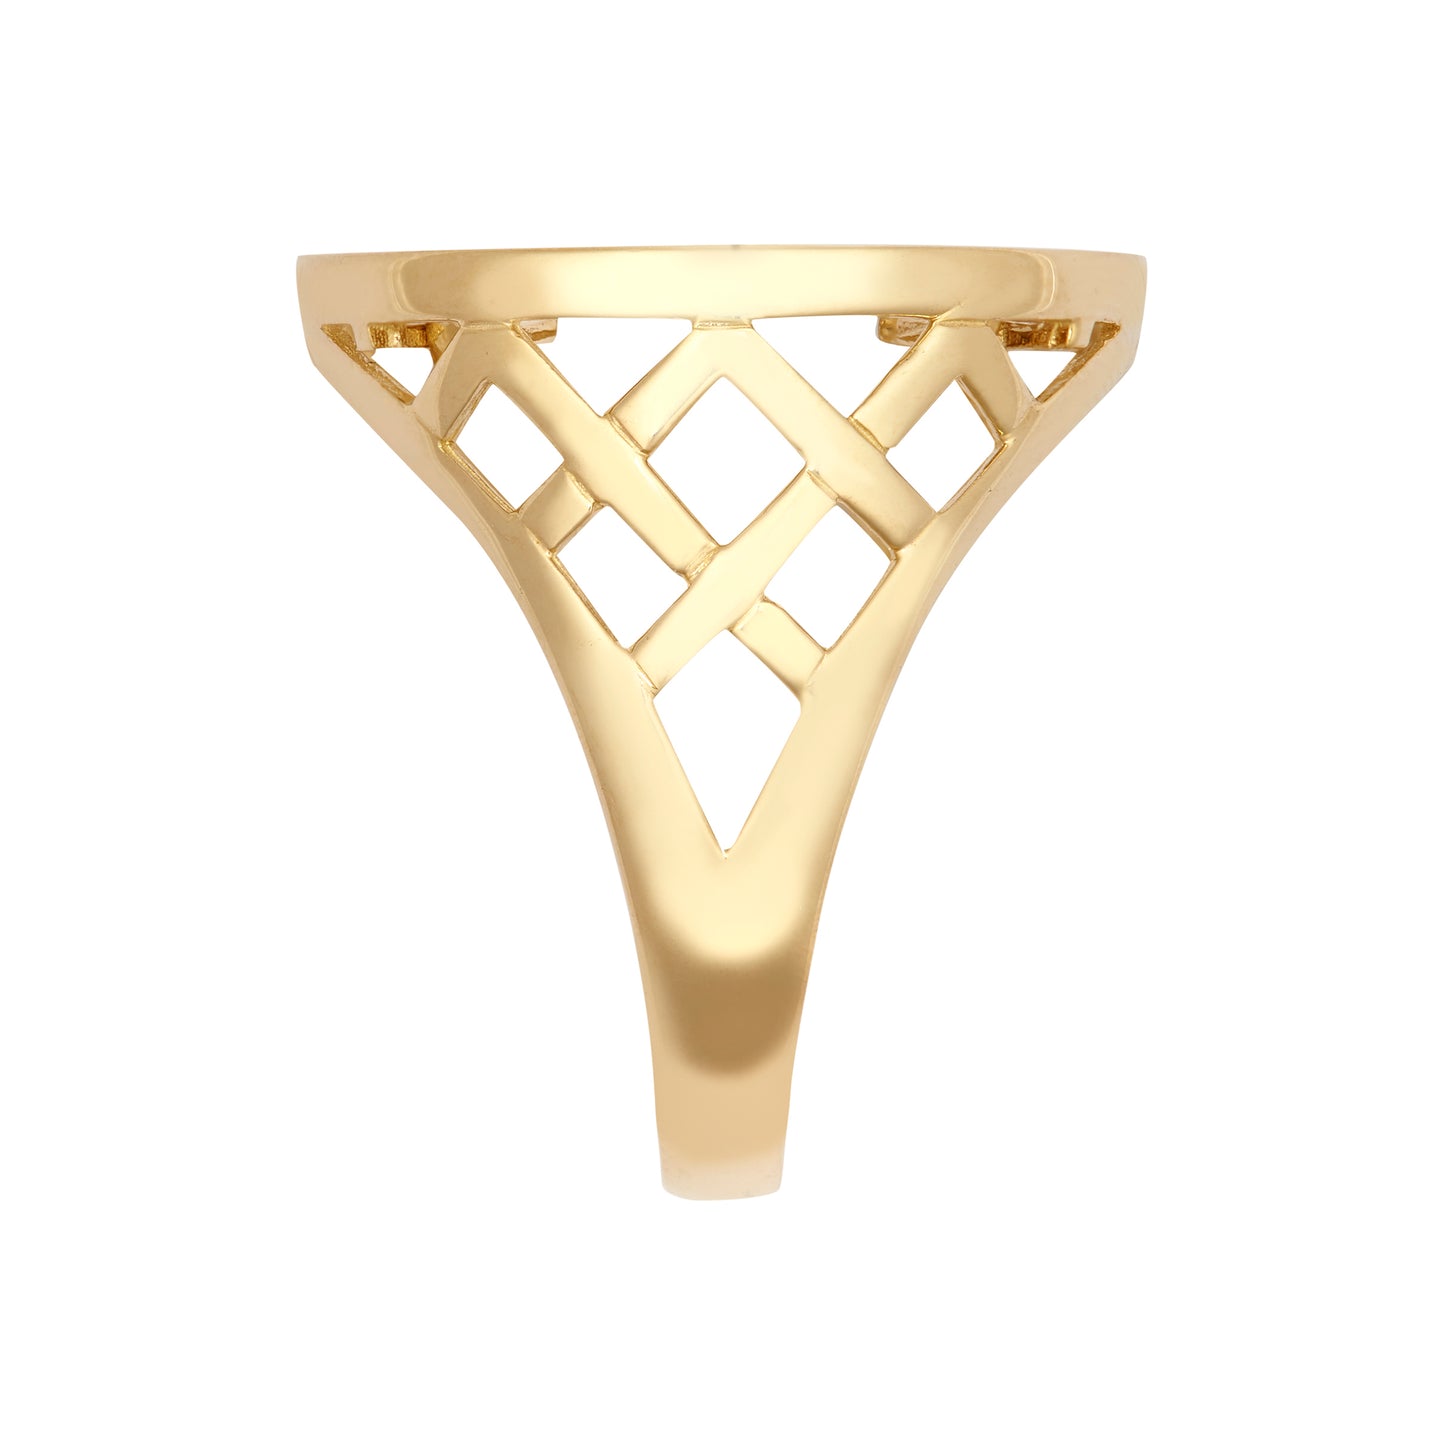 9ct Gold  Thick Basket Half Sovereign Mount Ring - JRN170-H